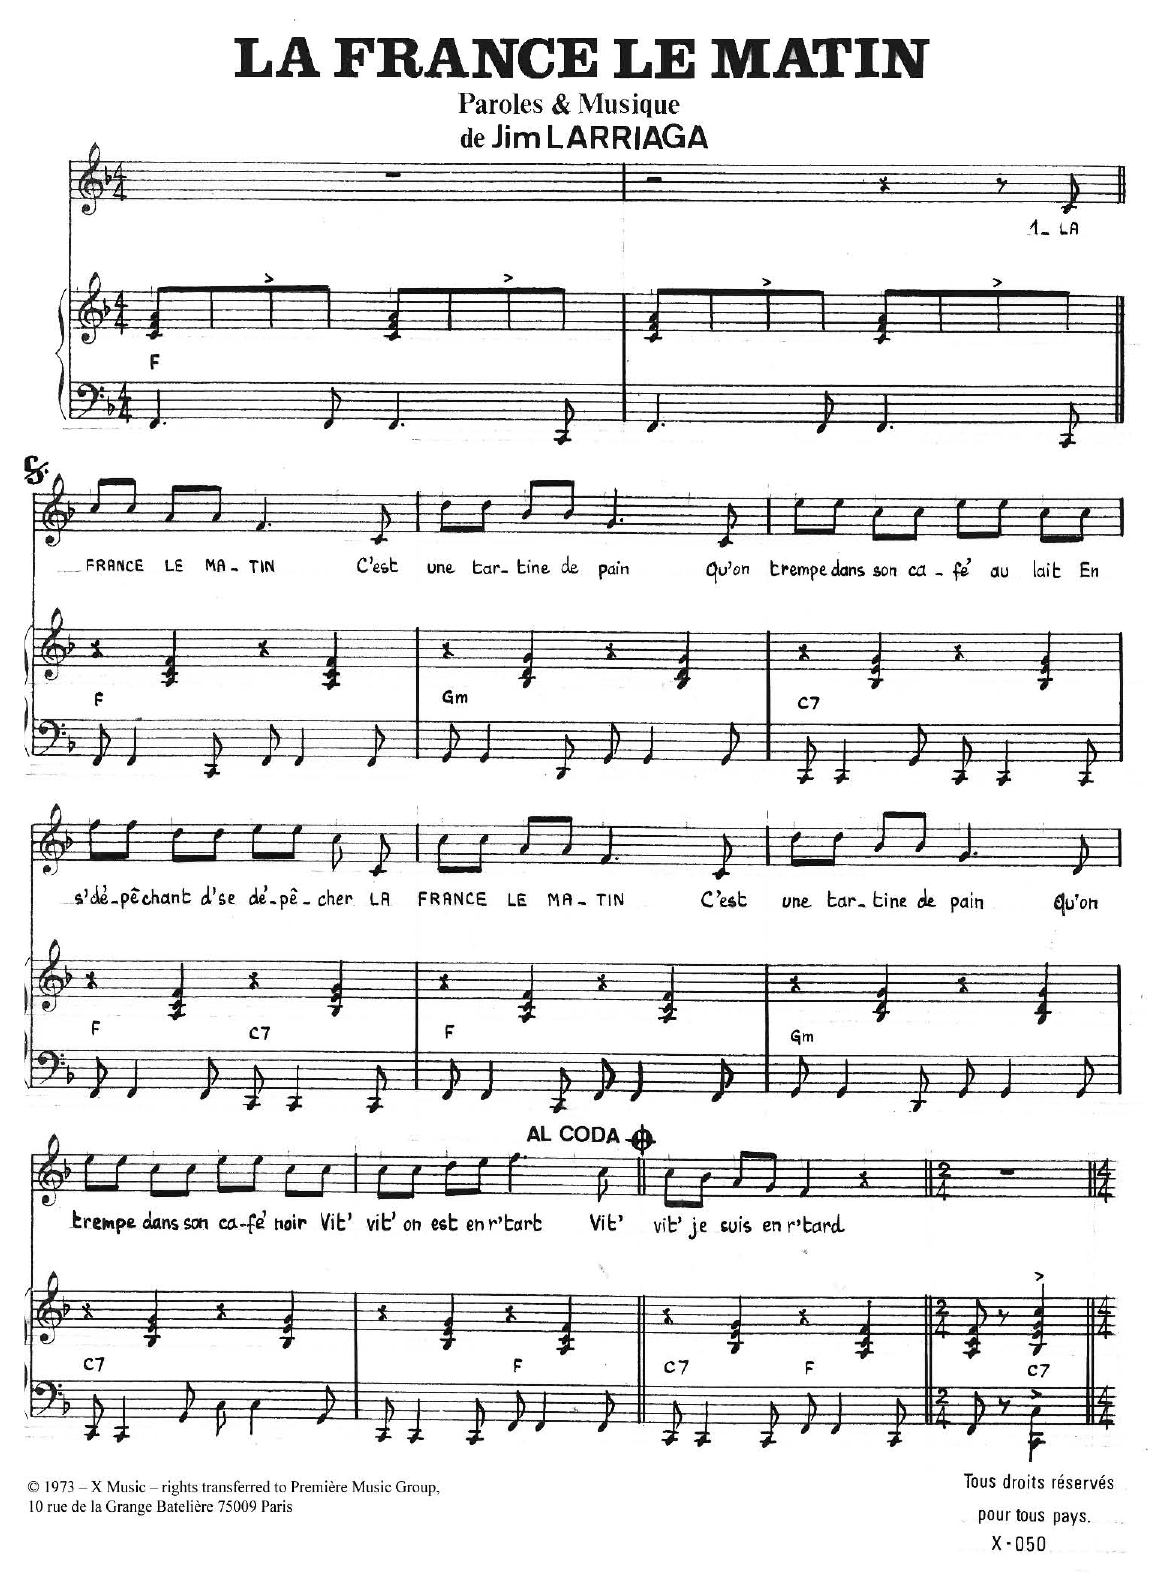 Jim Larriaga La France Le Matin Sheet Music Notes & Chords for Piano & Vocal - Download or Print PDF